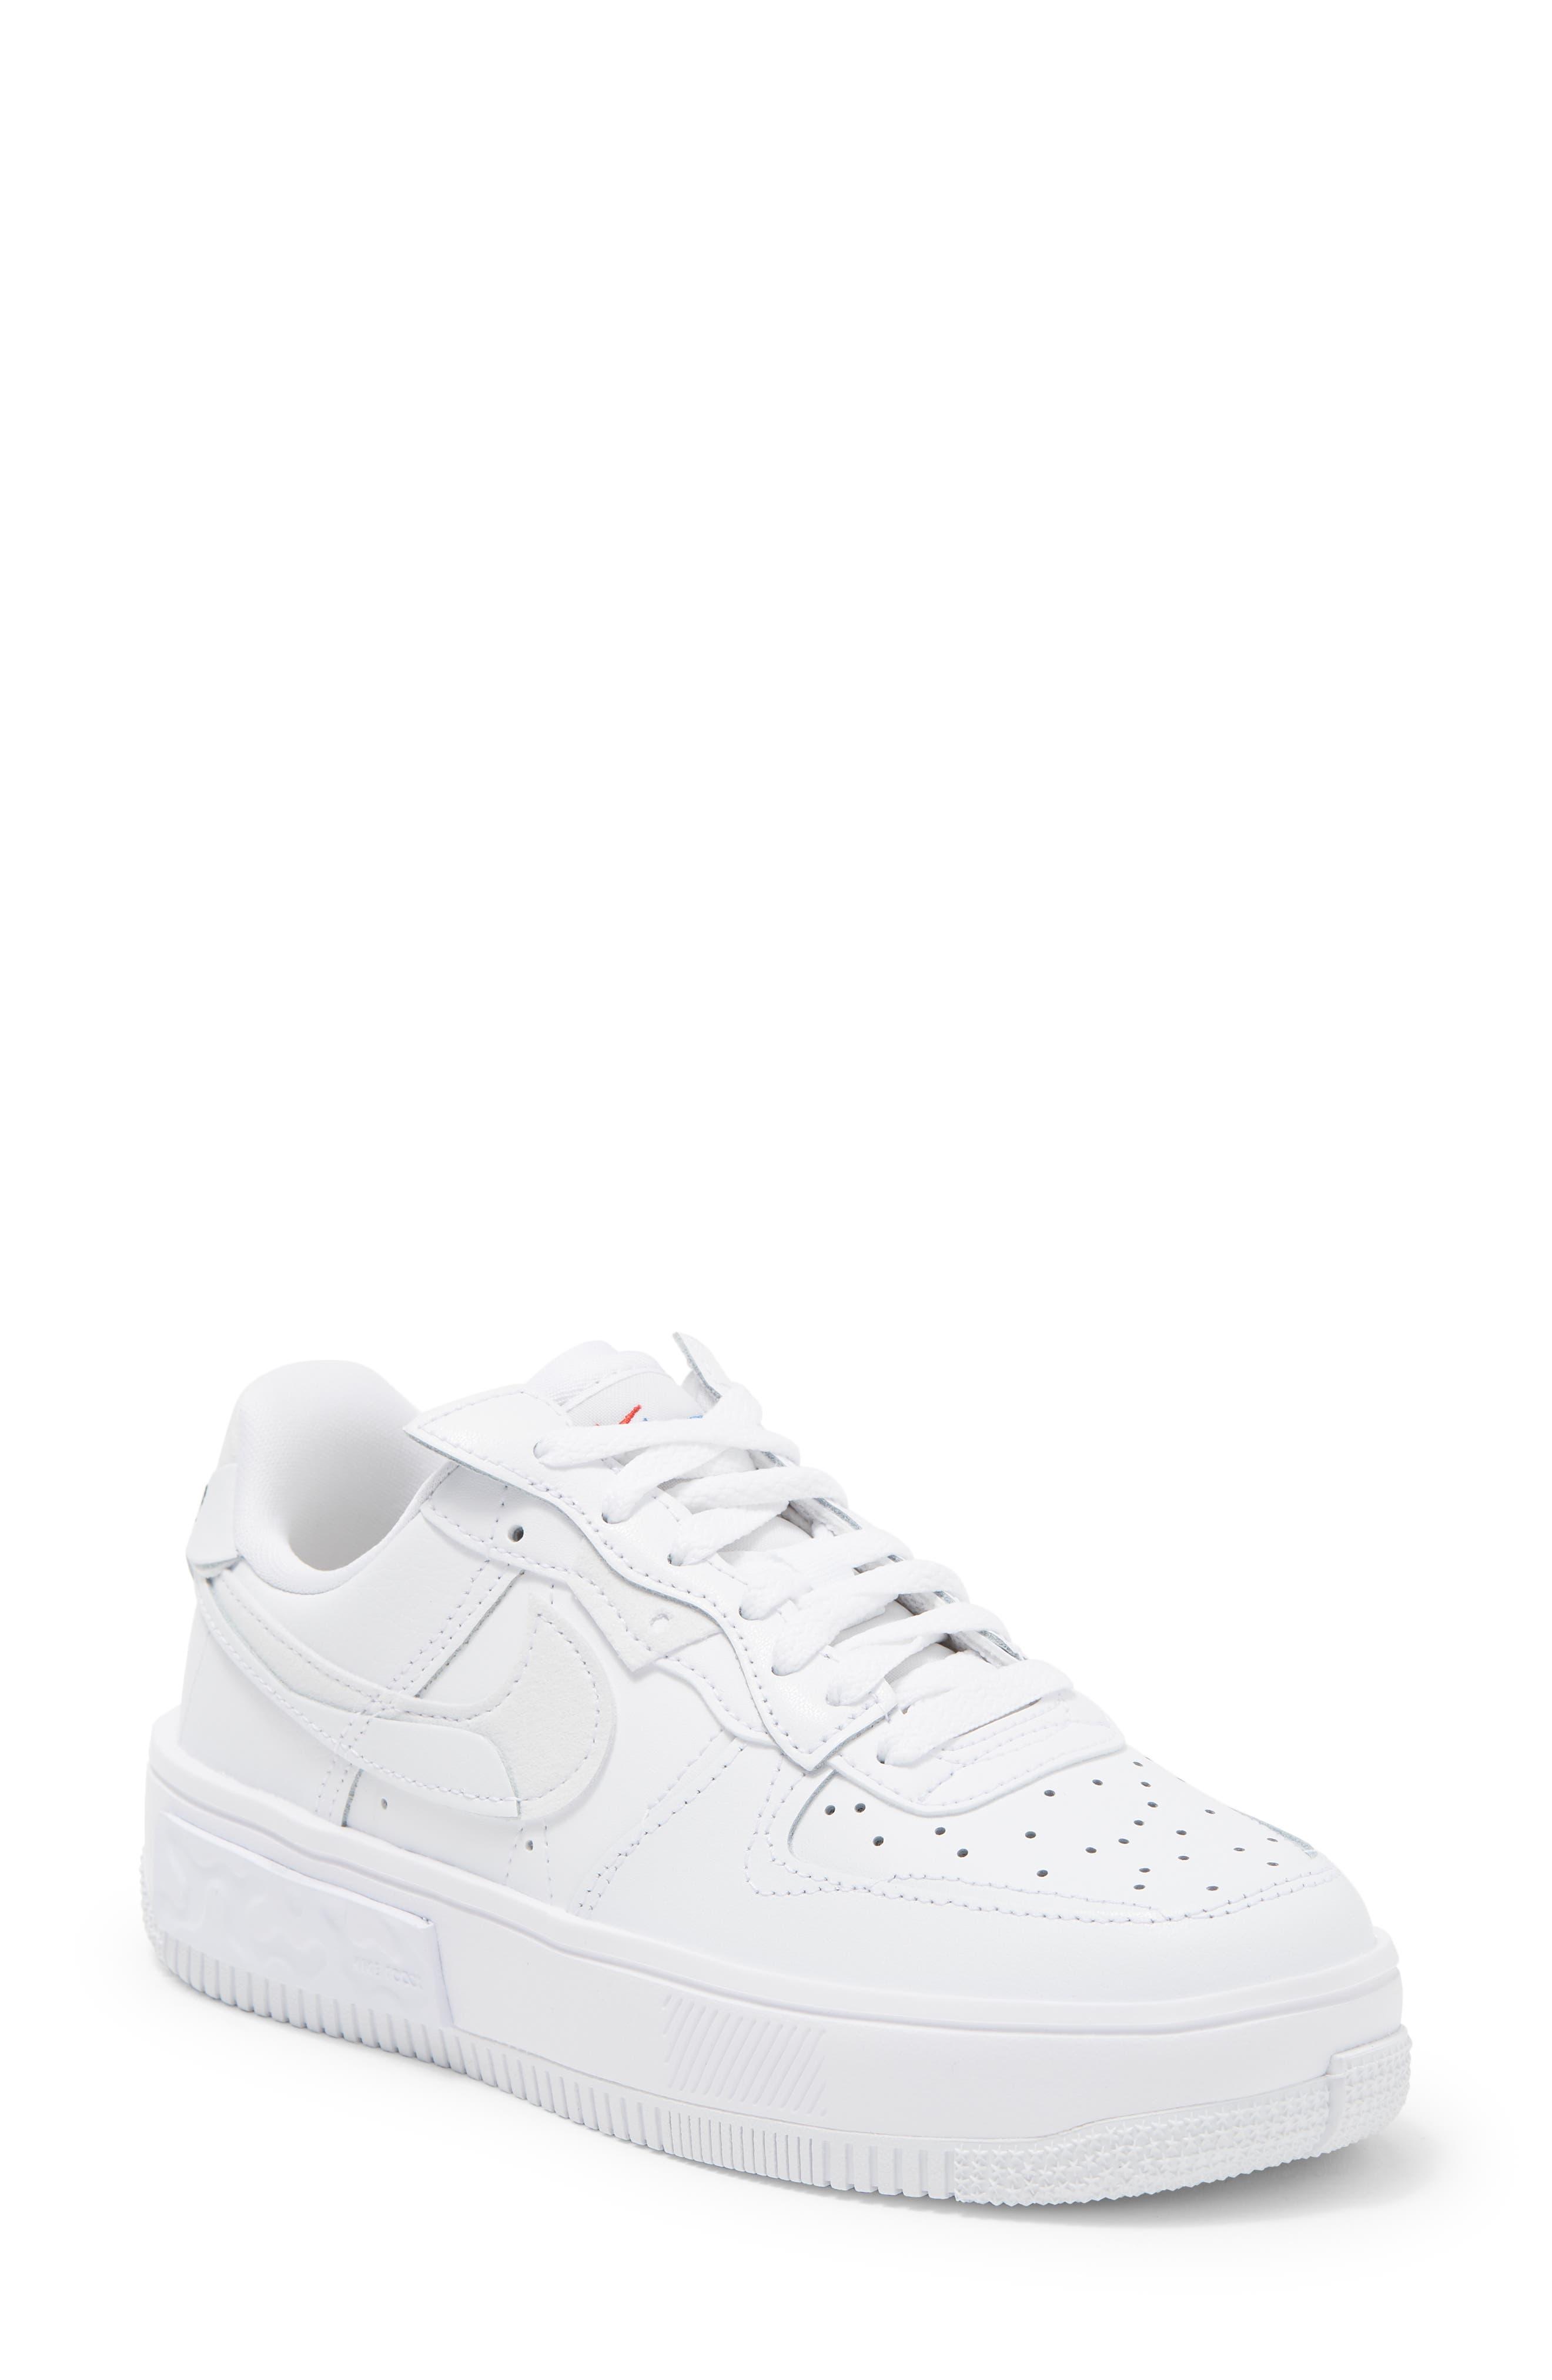 Nike Air Force 1 Fontanka Sneaker In White/white At Nordstrom Rack | Lyst